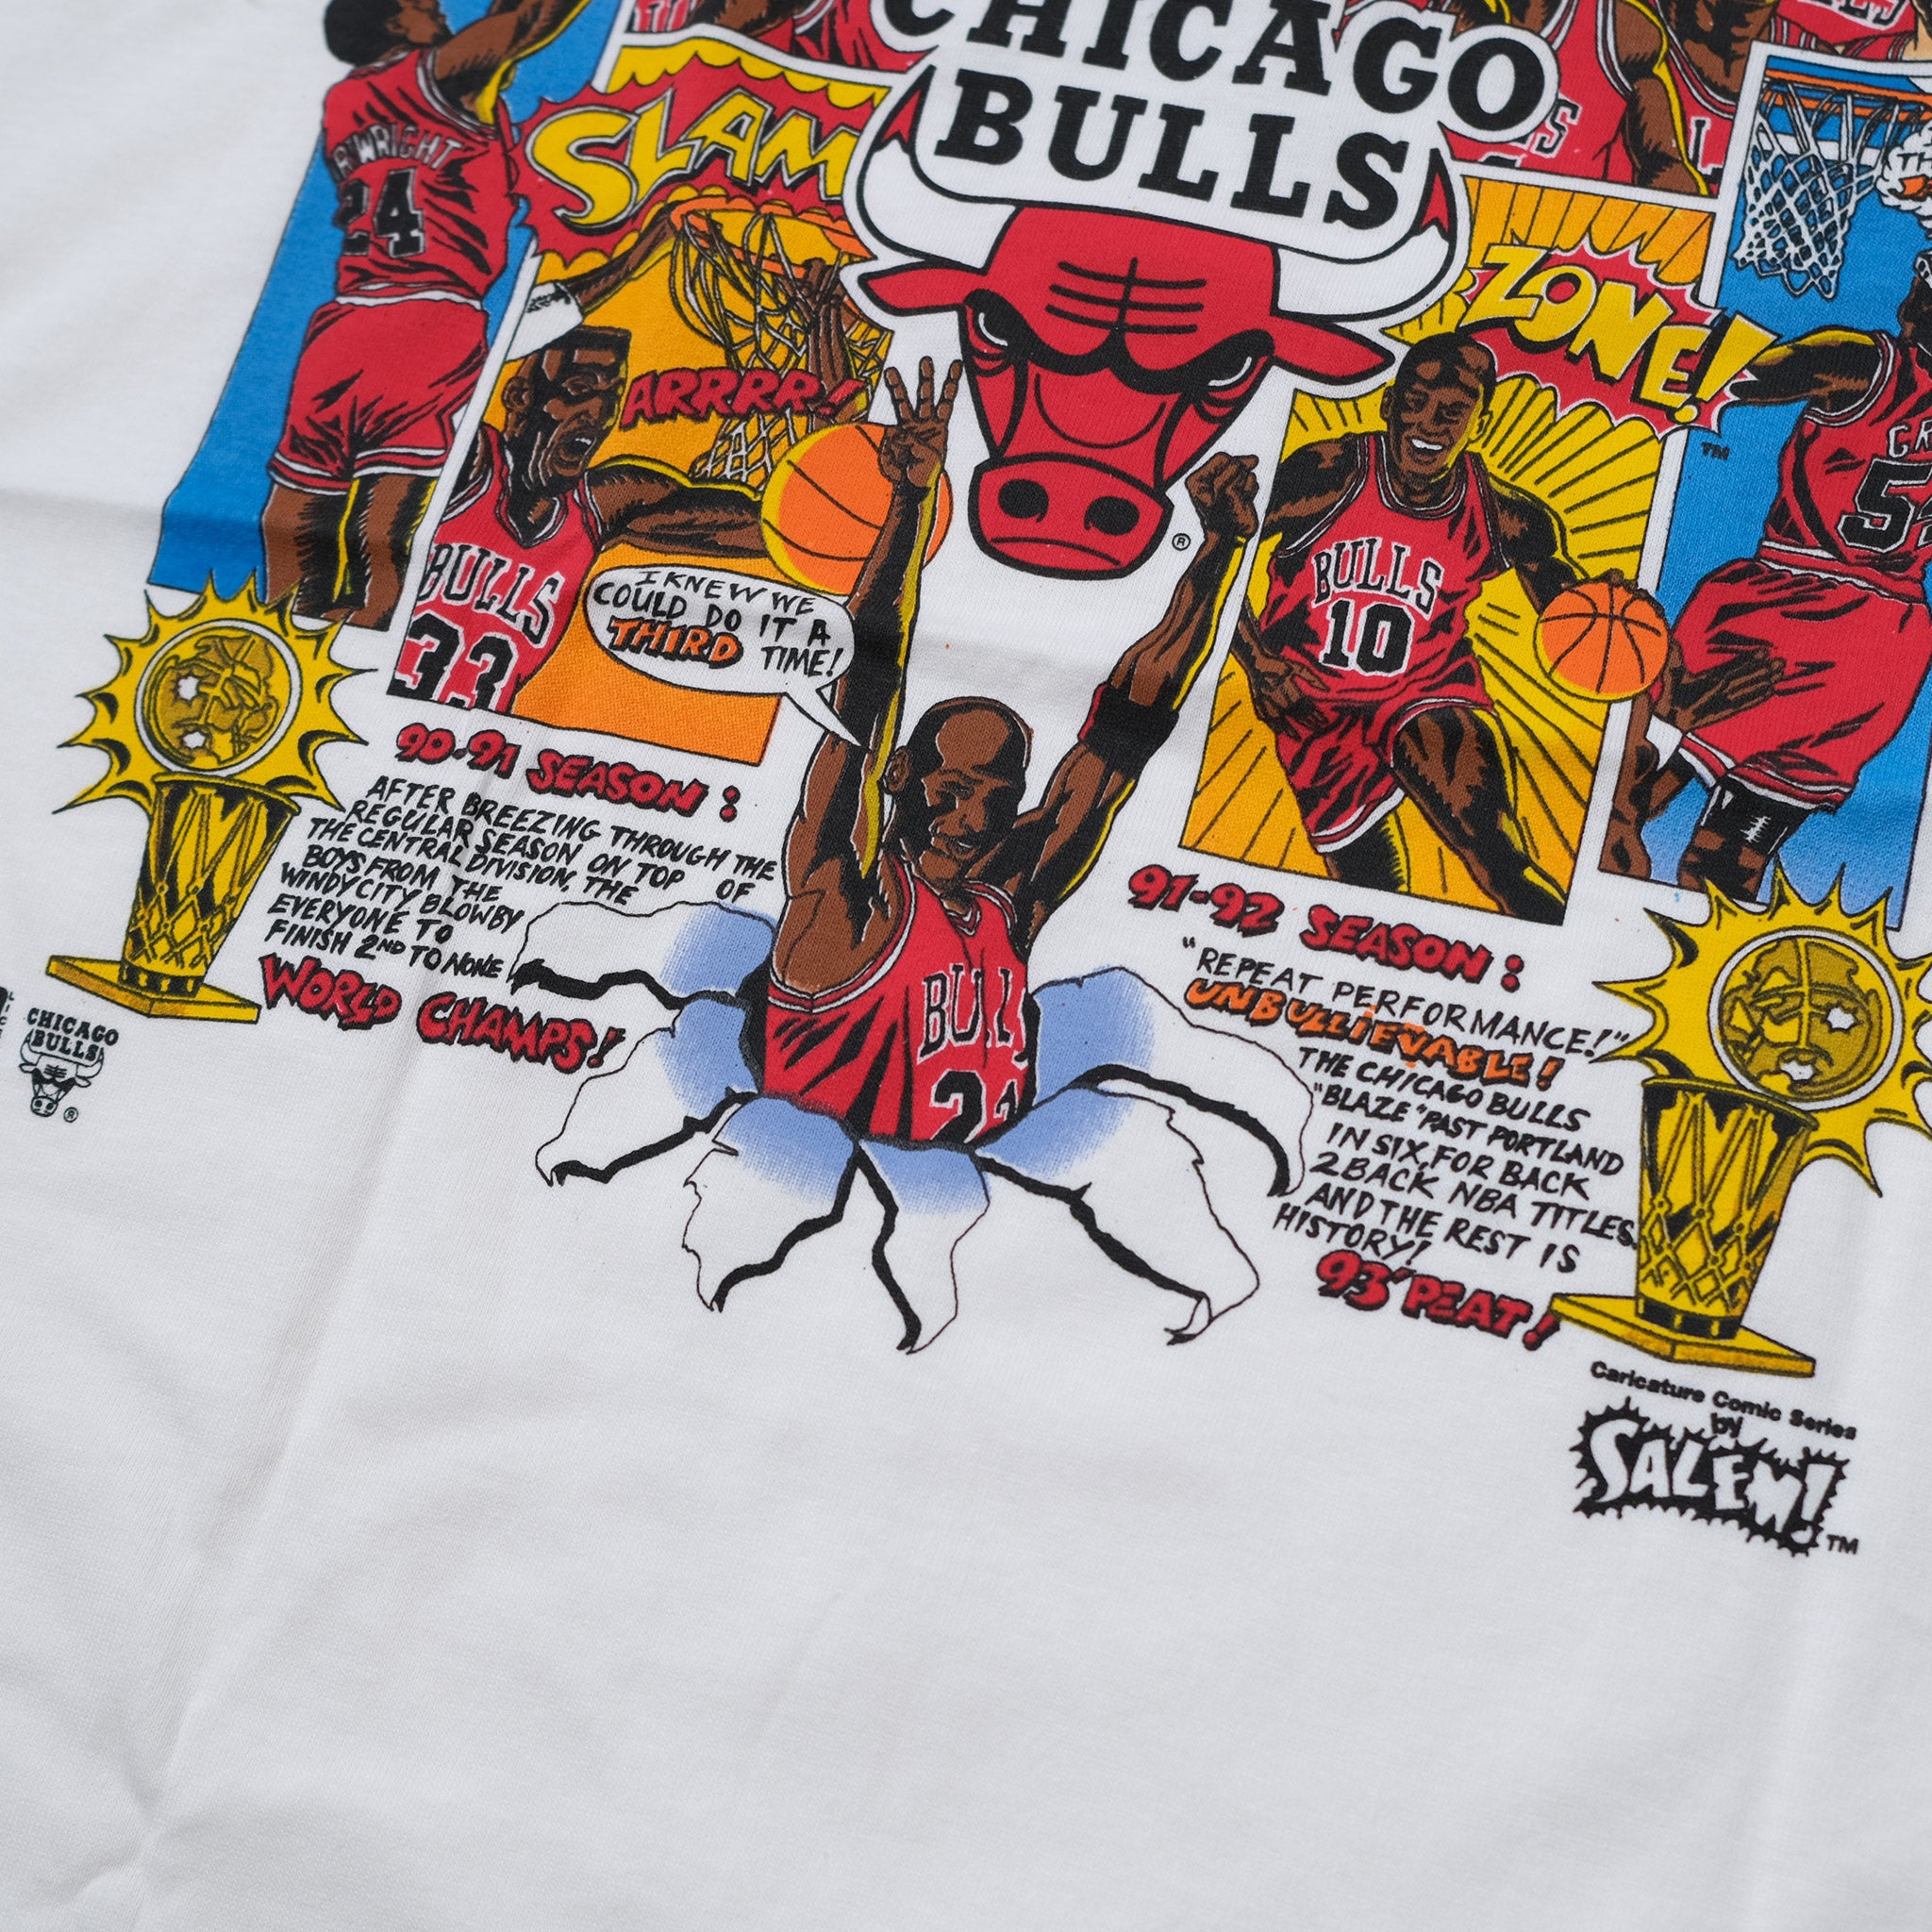 T-shirt Chicago Bulls 91/92/93 Nba Champs 3 Peat